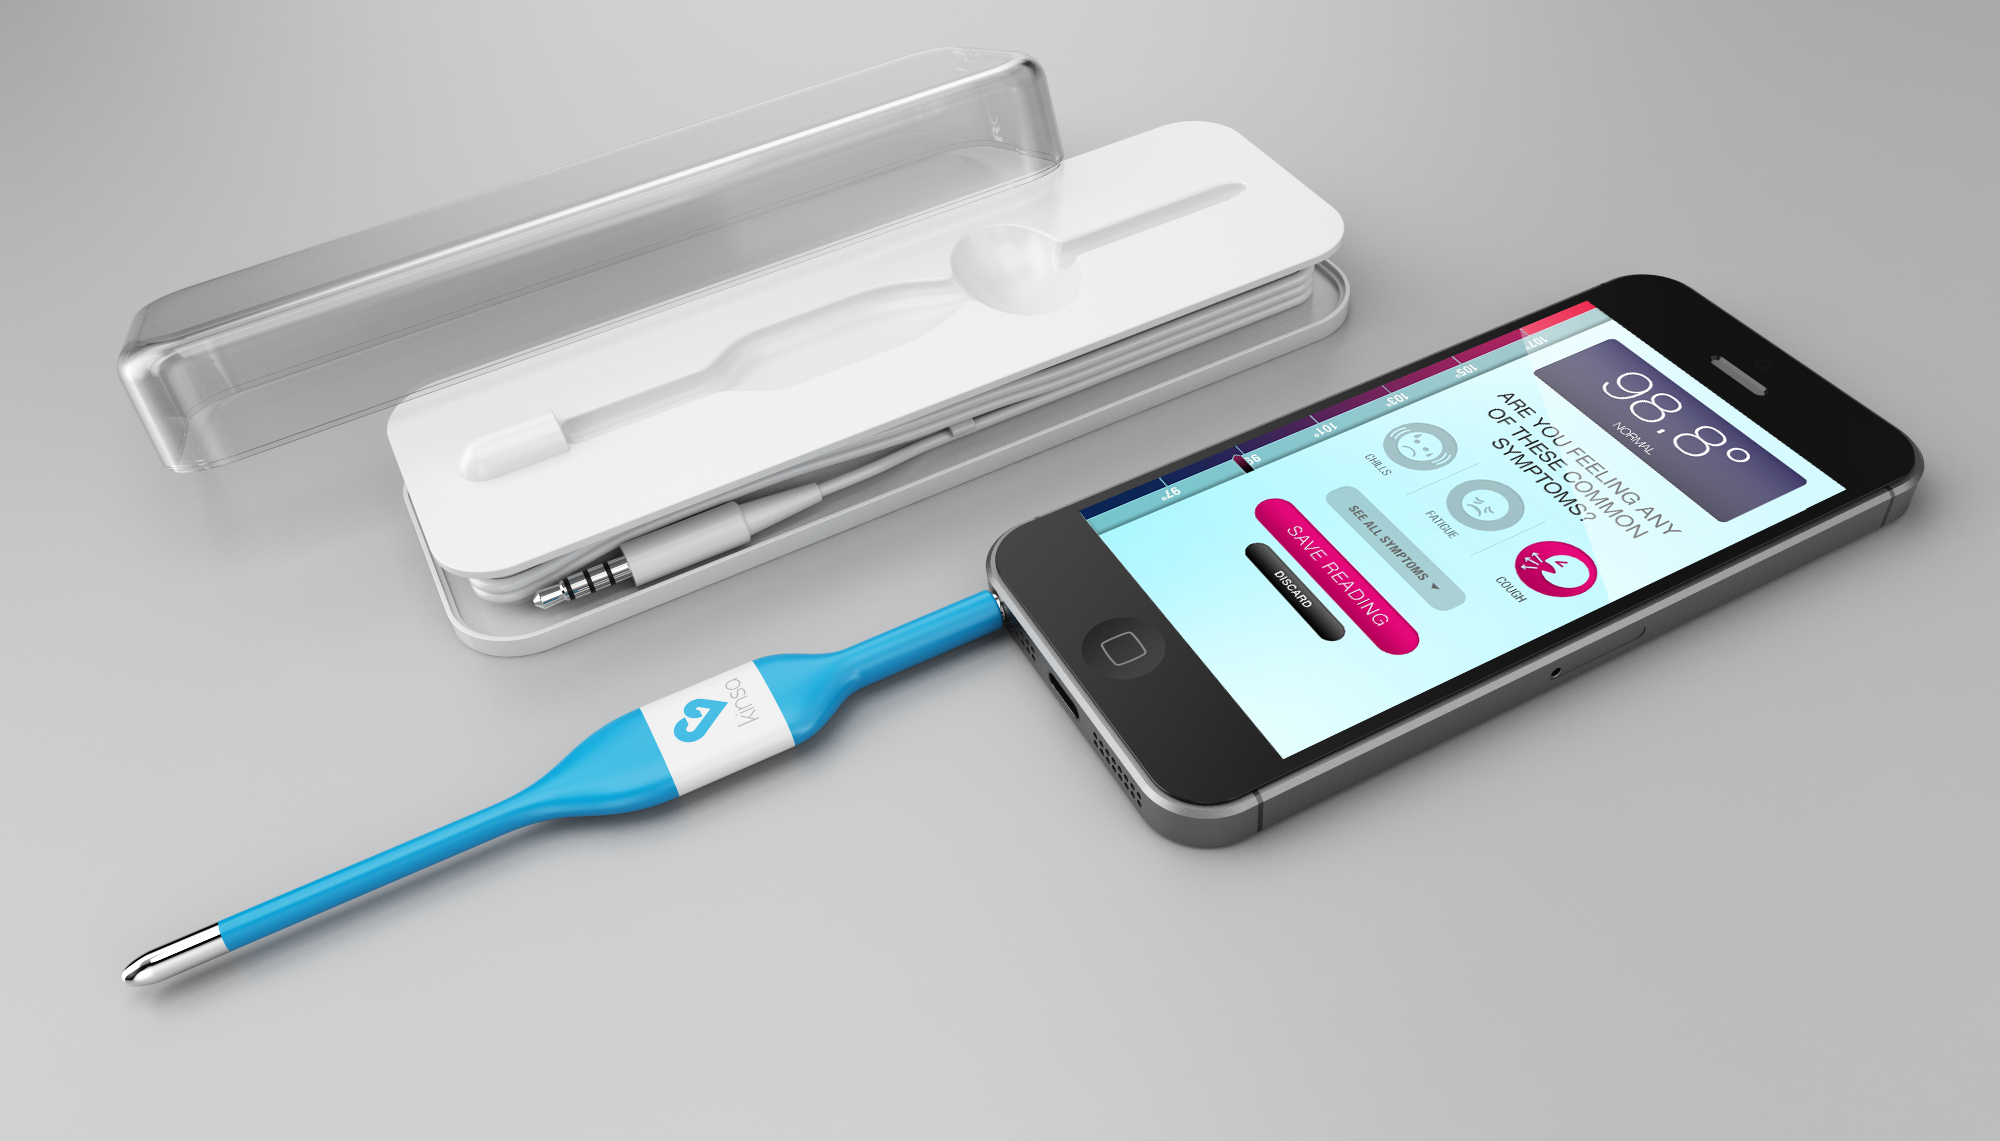 iPhoneで体温を測ってアプリから病状を診察できる『Kinsa Smart Thermometer』